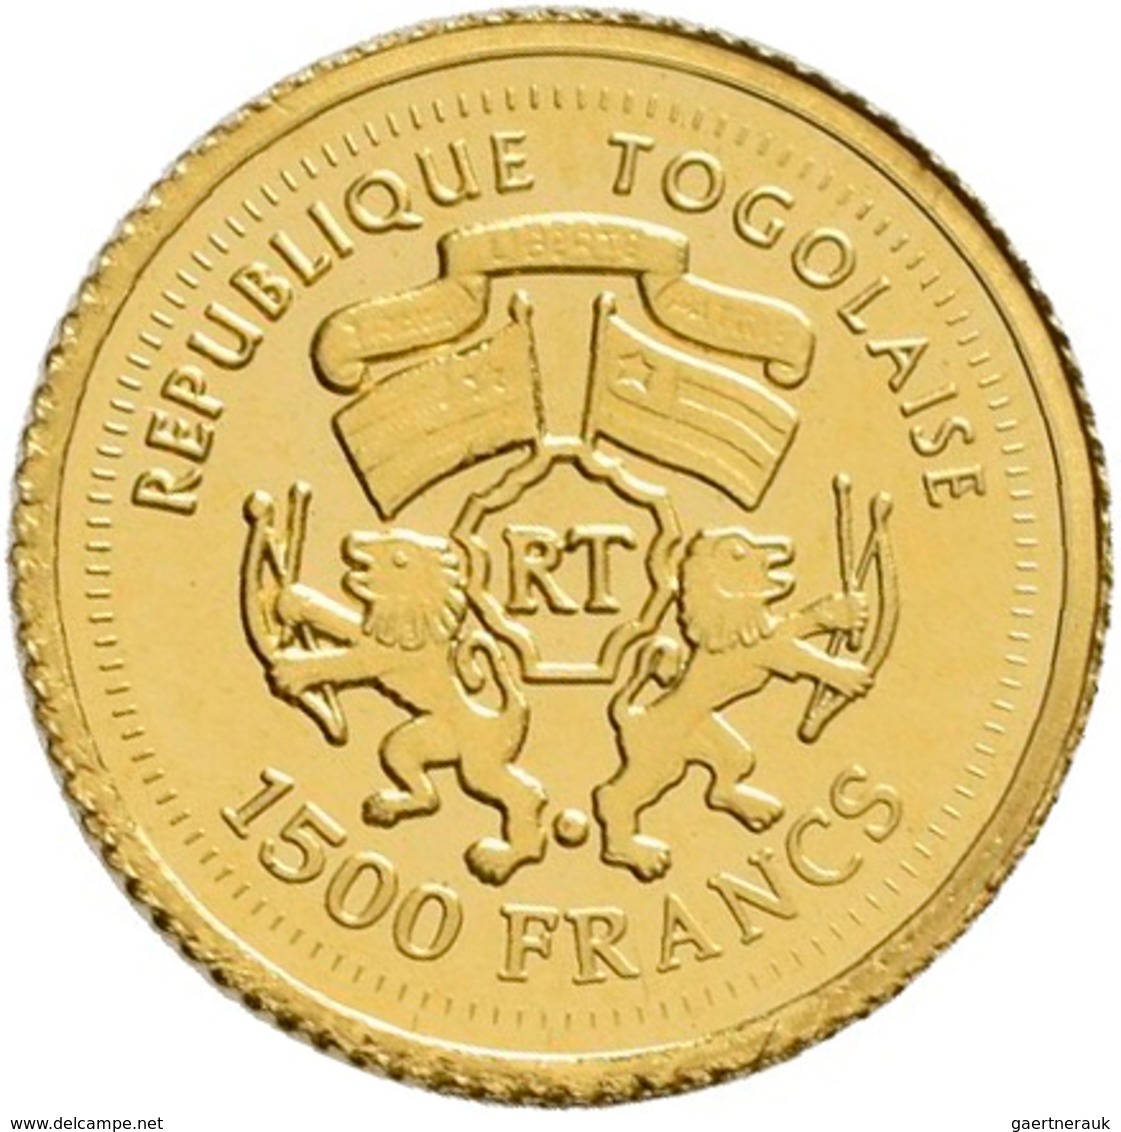 Alle Welt  - Anlagegold: Lot 13 Goldmünzen alle Welt; Australien: 5 Dollars 2002 (Fein 1,55 g), 5 Do